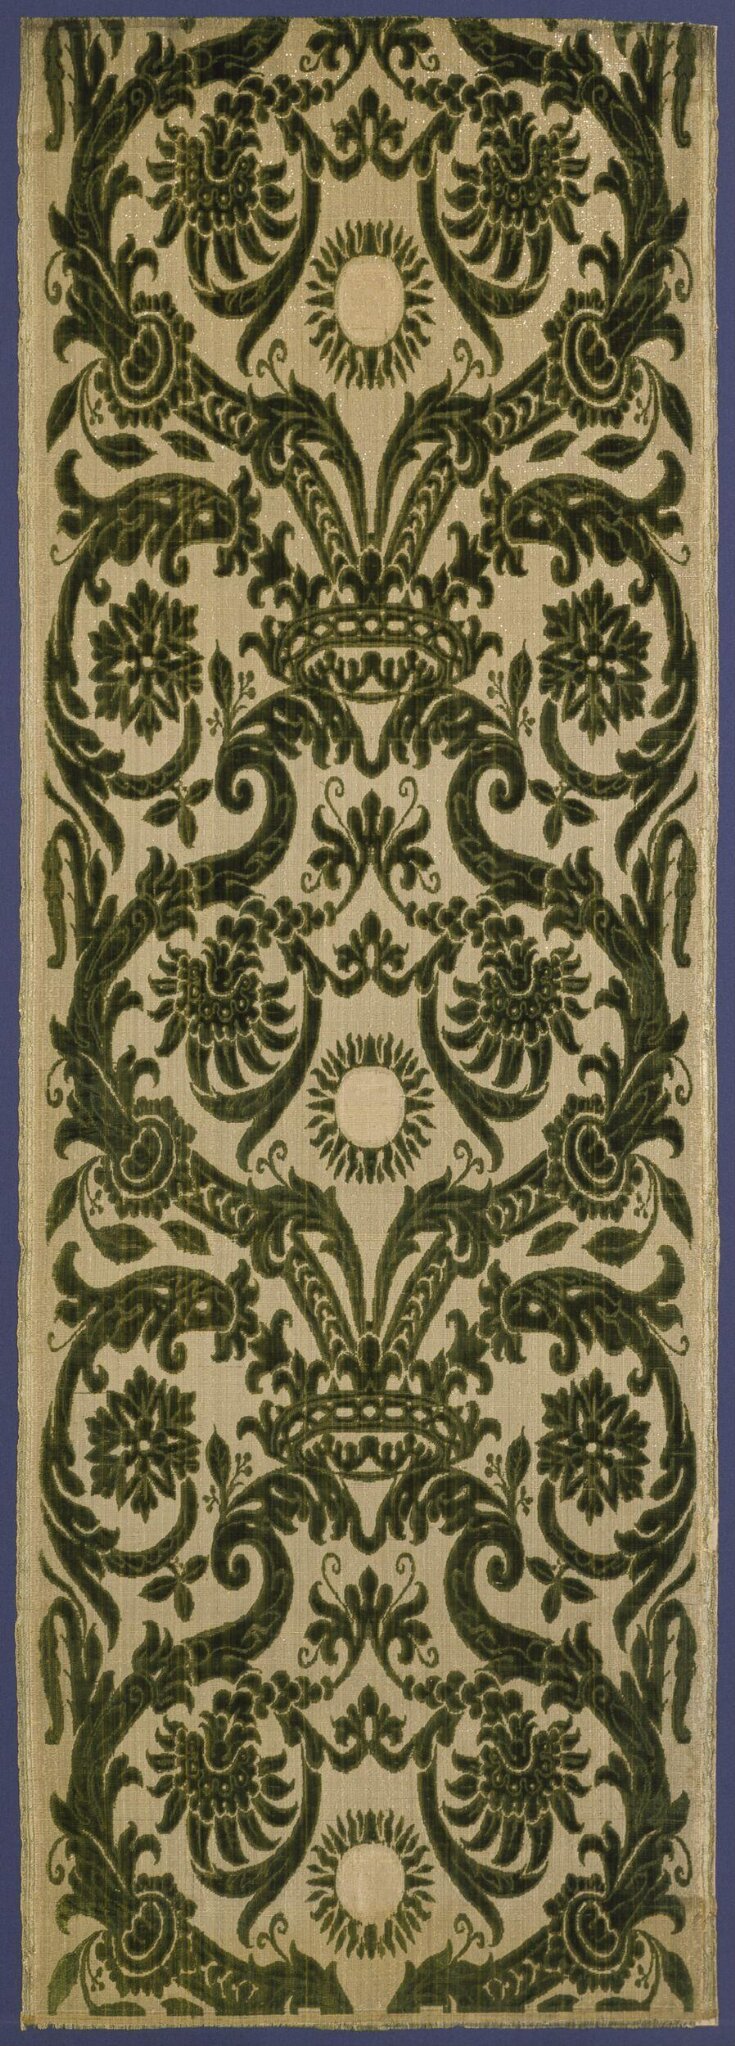 Silk Velvet Furnishing Fabric top image